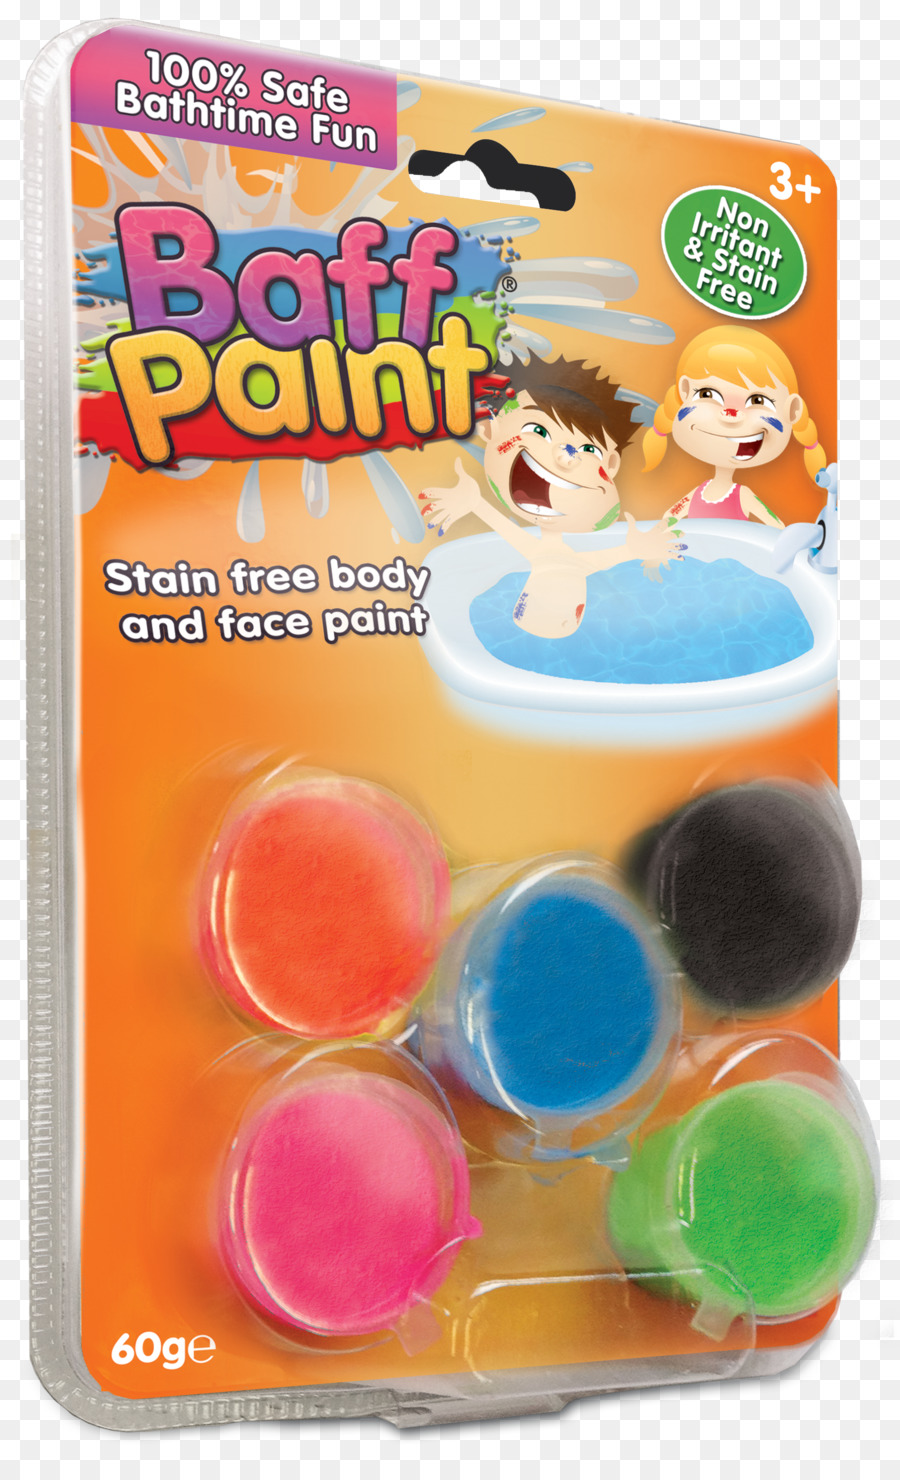 Toy paint. Краски для ванной детские. Краски игрушки. Наборы для ванны детские краски. Игрушки краски игрушки.